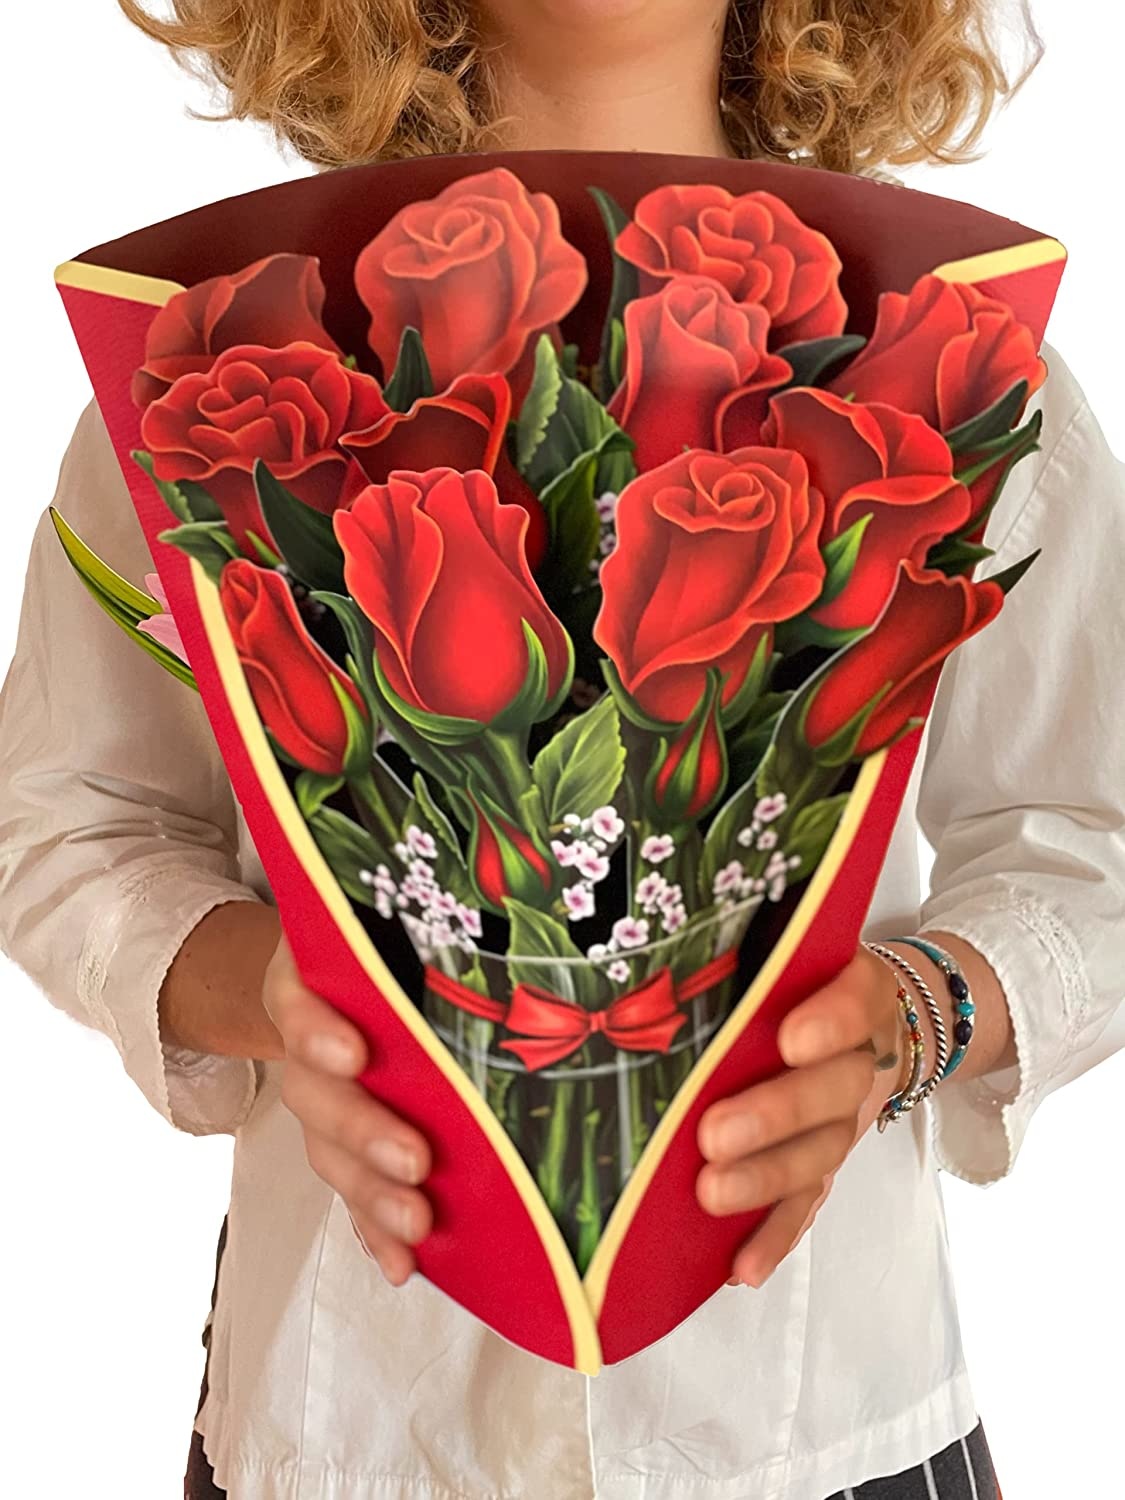 Freshcut Paper Red Roses 3D Pop Up Bouquet